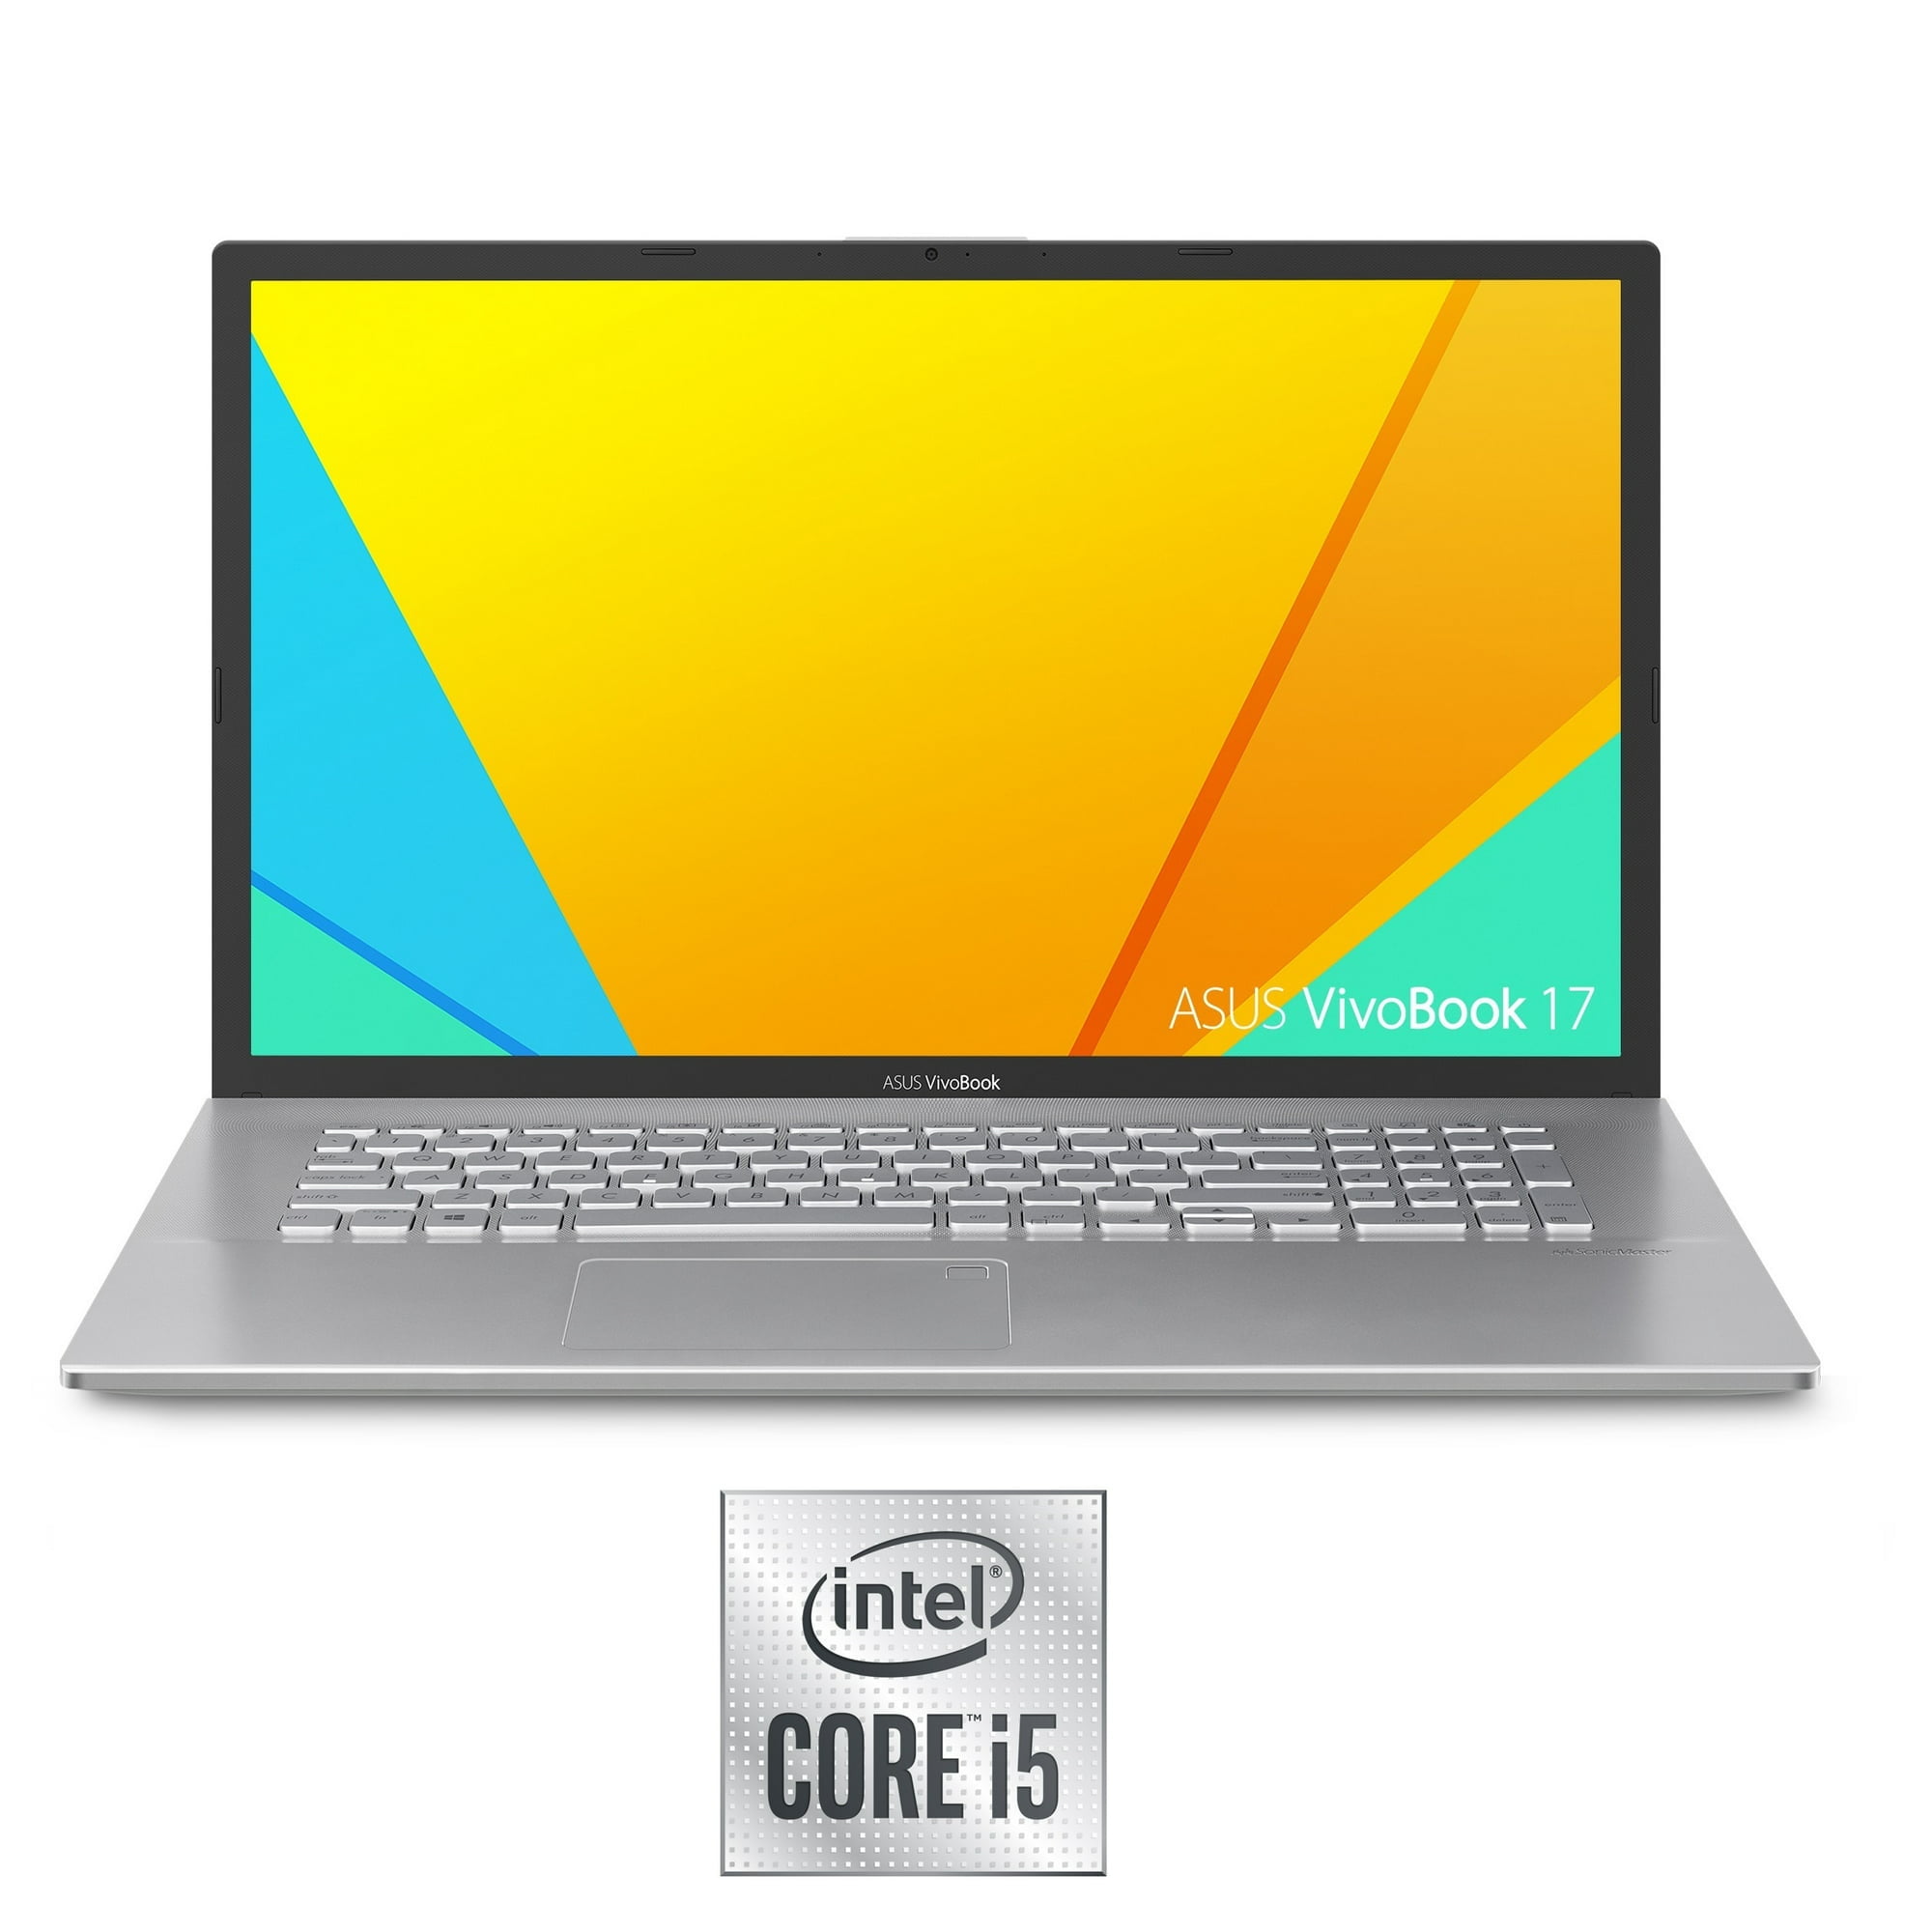 ASUS VivoBook 17.3" HD+ Intel Core i5-1035G1 (max 3.6GHz), 12GB RAM, 1TB HDD, Windows 11 Home, Silver, Upgraded AIEC Memory, SSD Accessories - Walmart.com